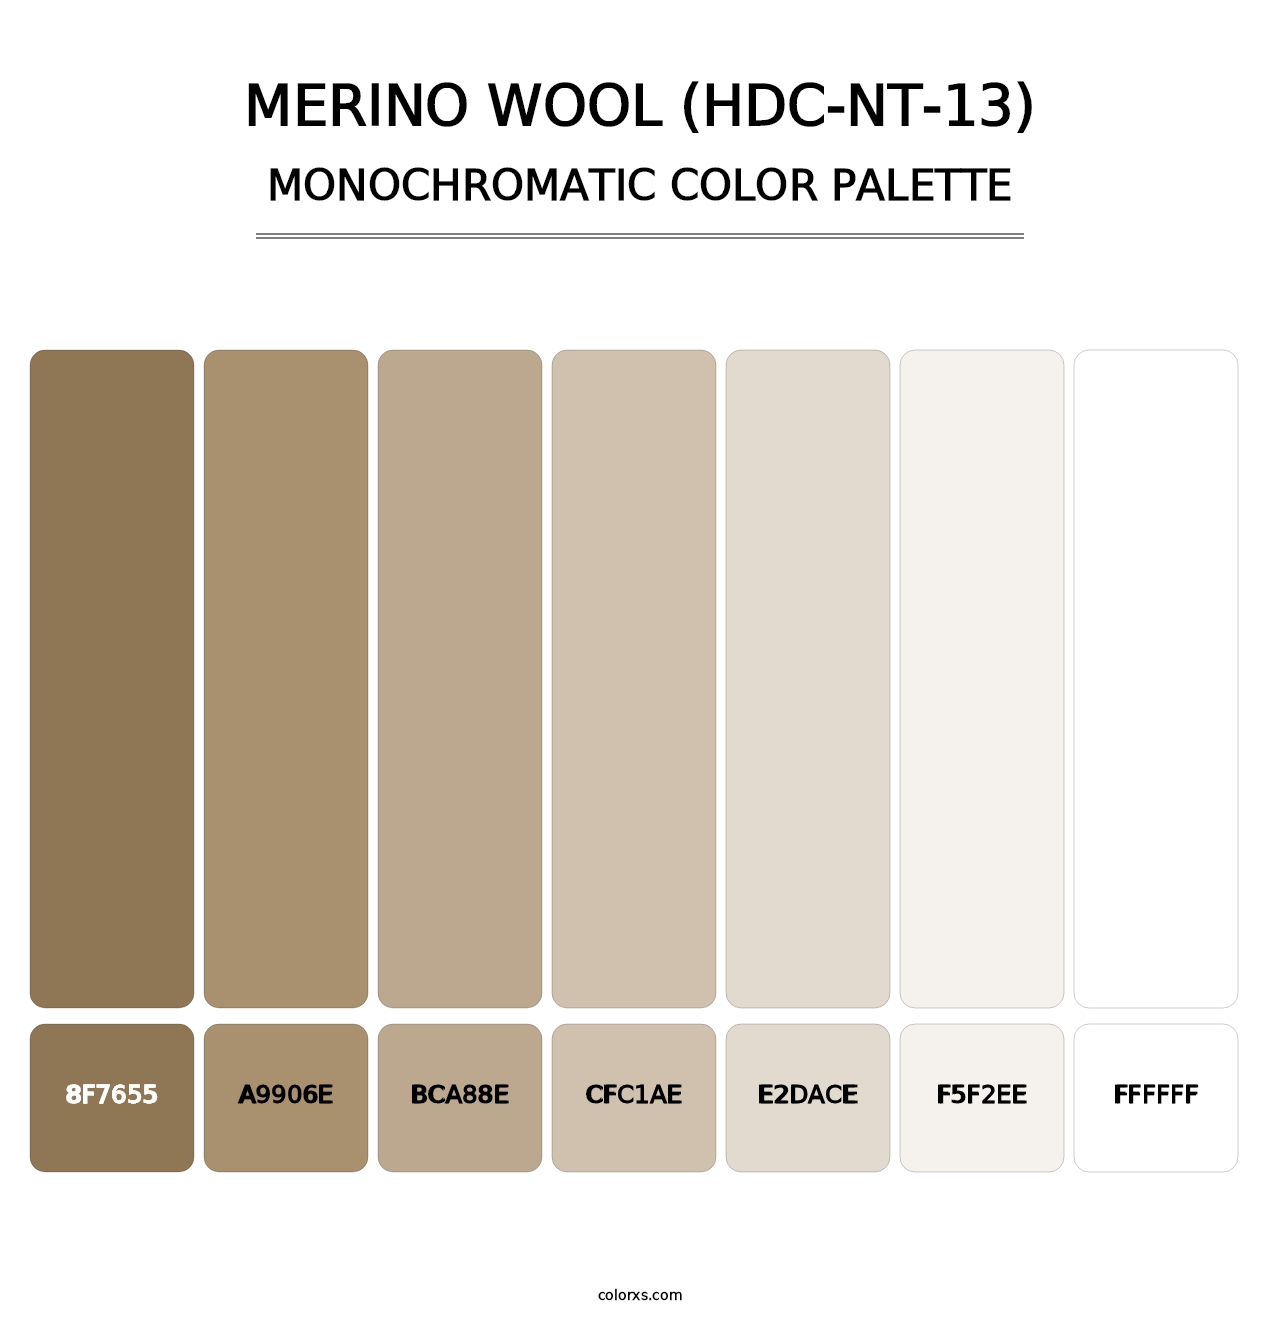 Merino Wool (HDC-NT-13) - Monochromatic Color Palette